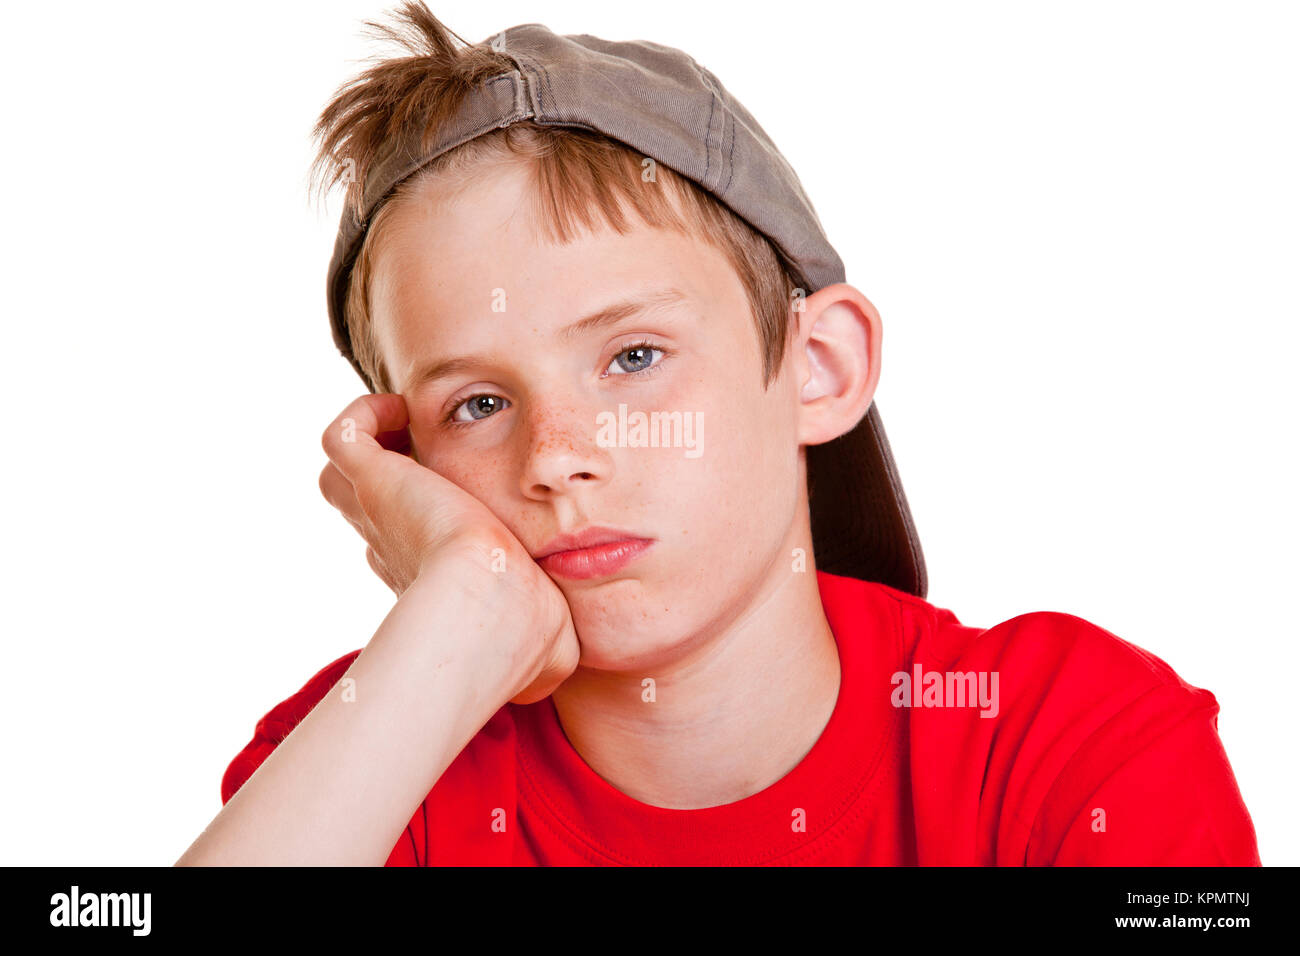 Bored depressed young boy with sad eyes Stock Photo